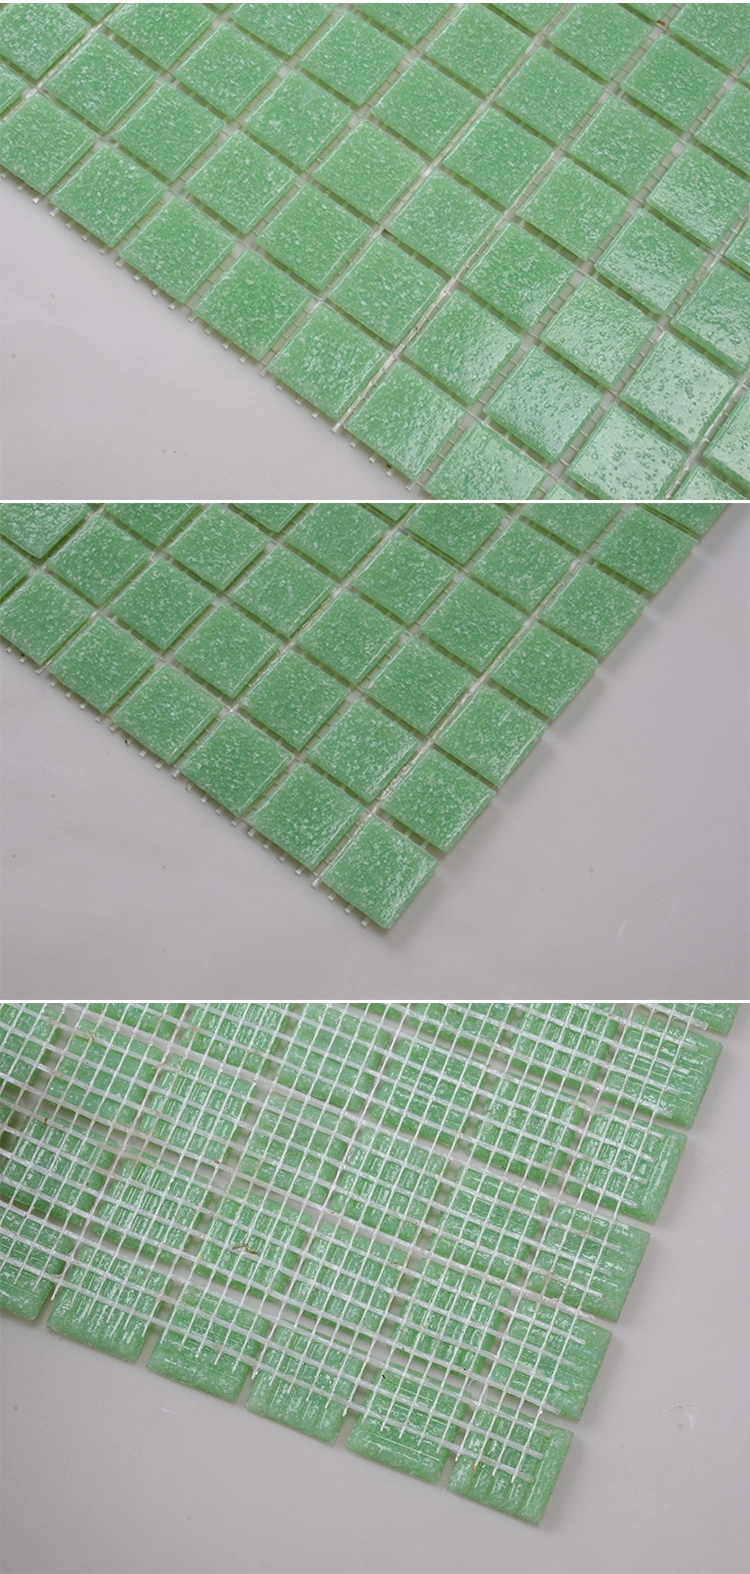 Canada Style Bathroom Decoration Ming Green Mosaic Tile